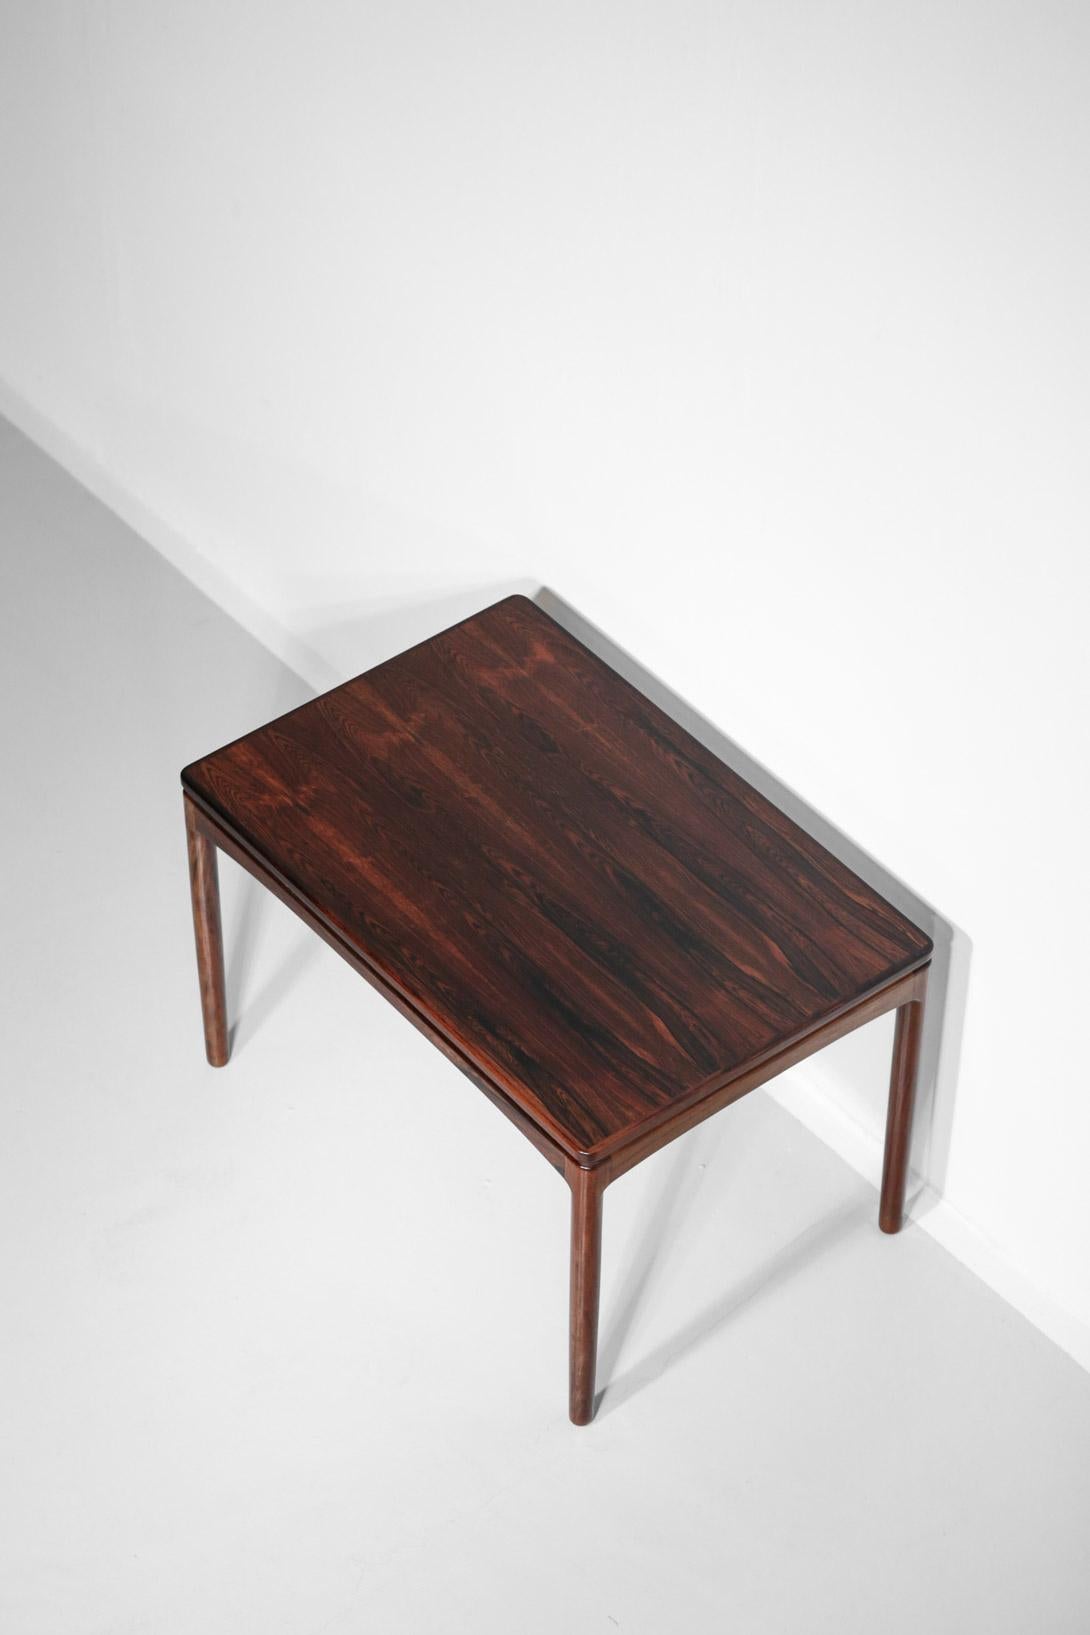 Rosewood Coffee Table by Edmund Jorgensen 1960s Scandinavian Design 1